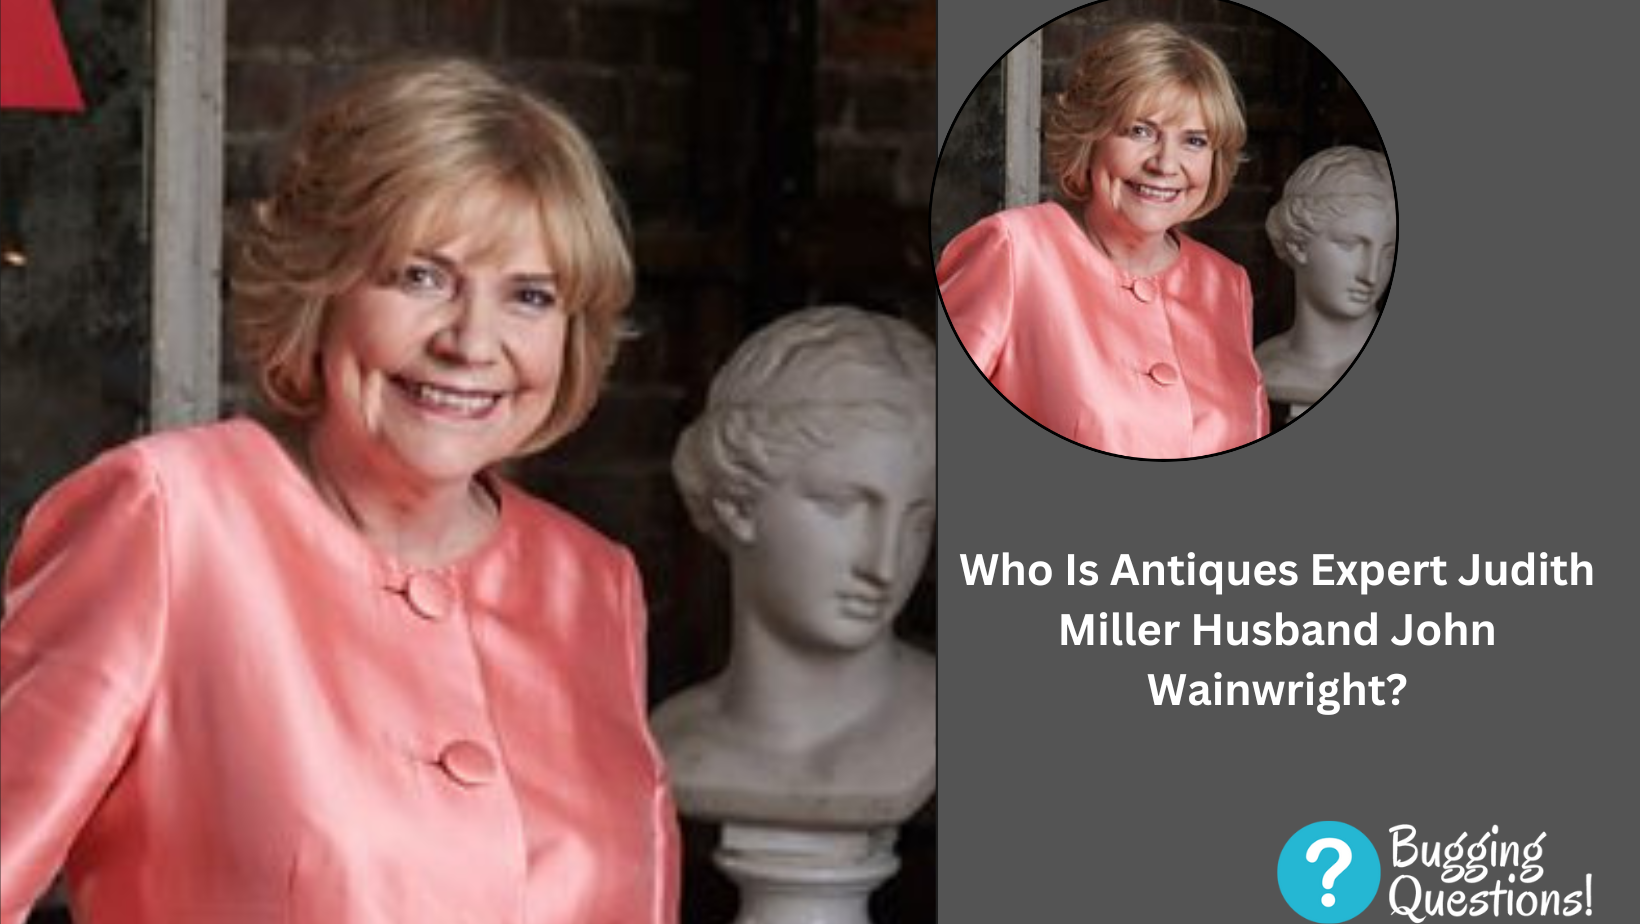 Who Is Antiques Expert Judith Miller Husband John Wainwright?